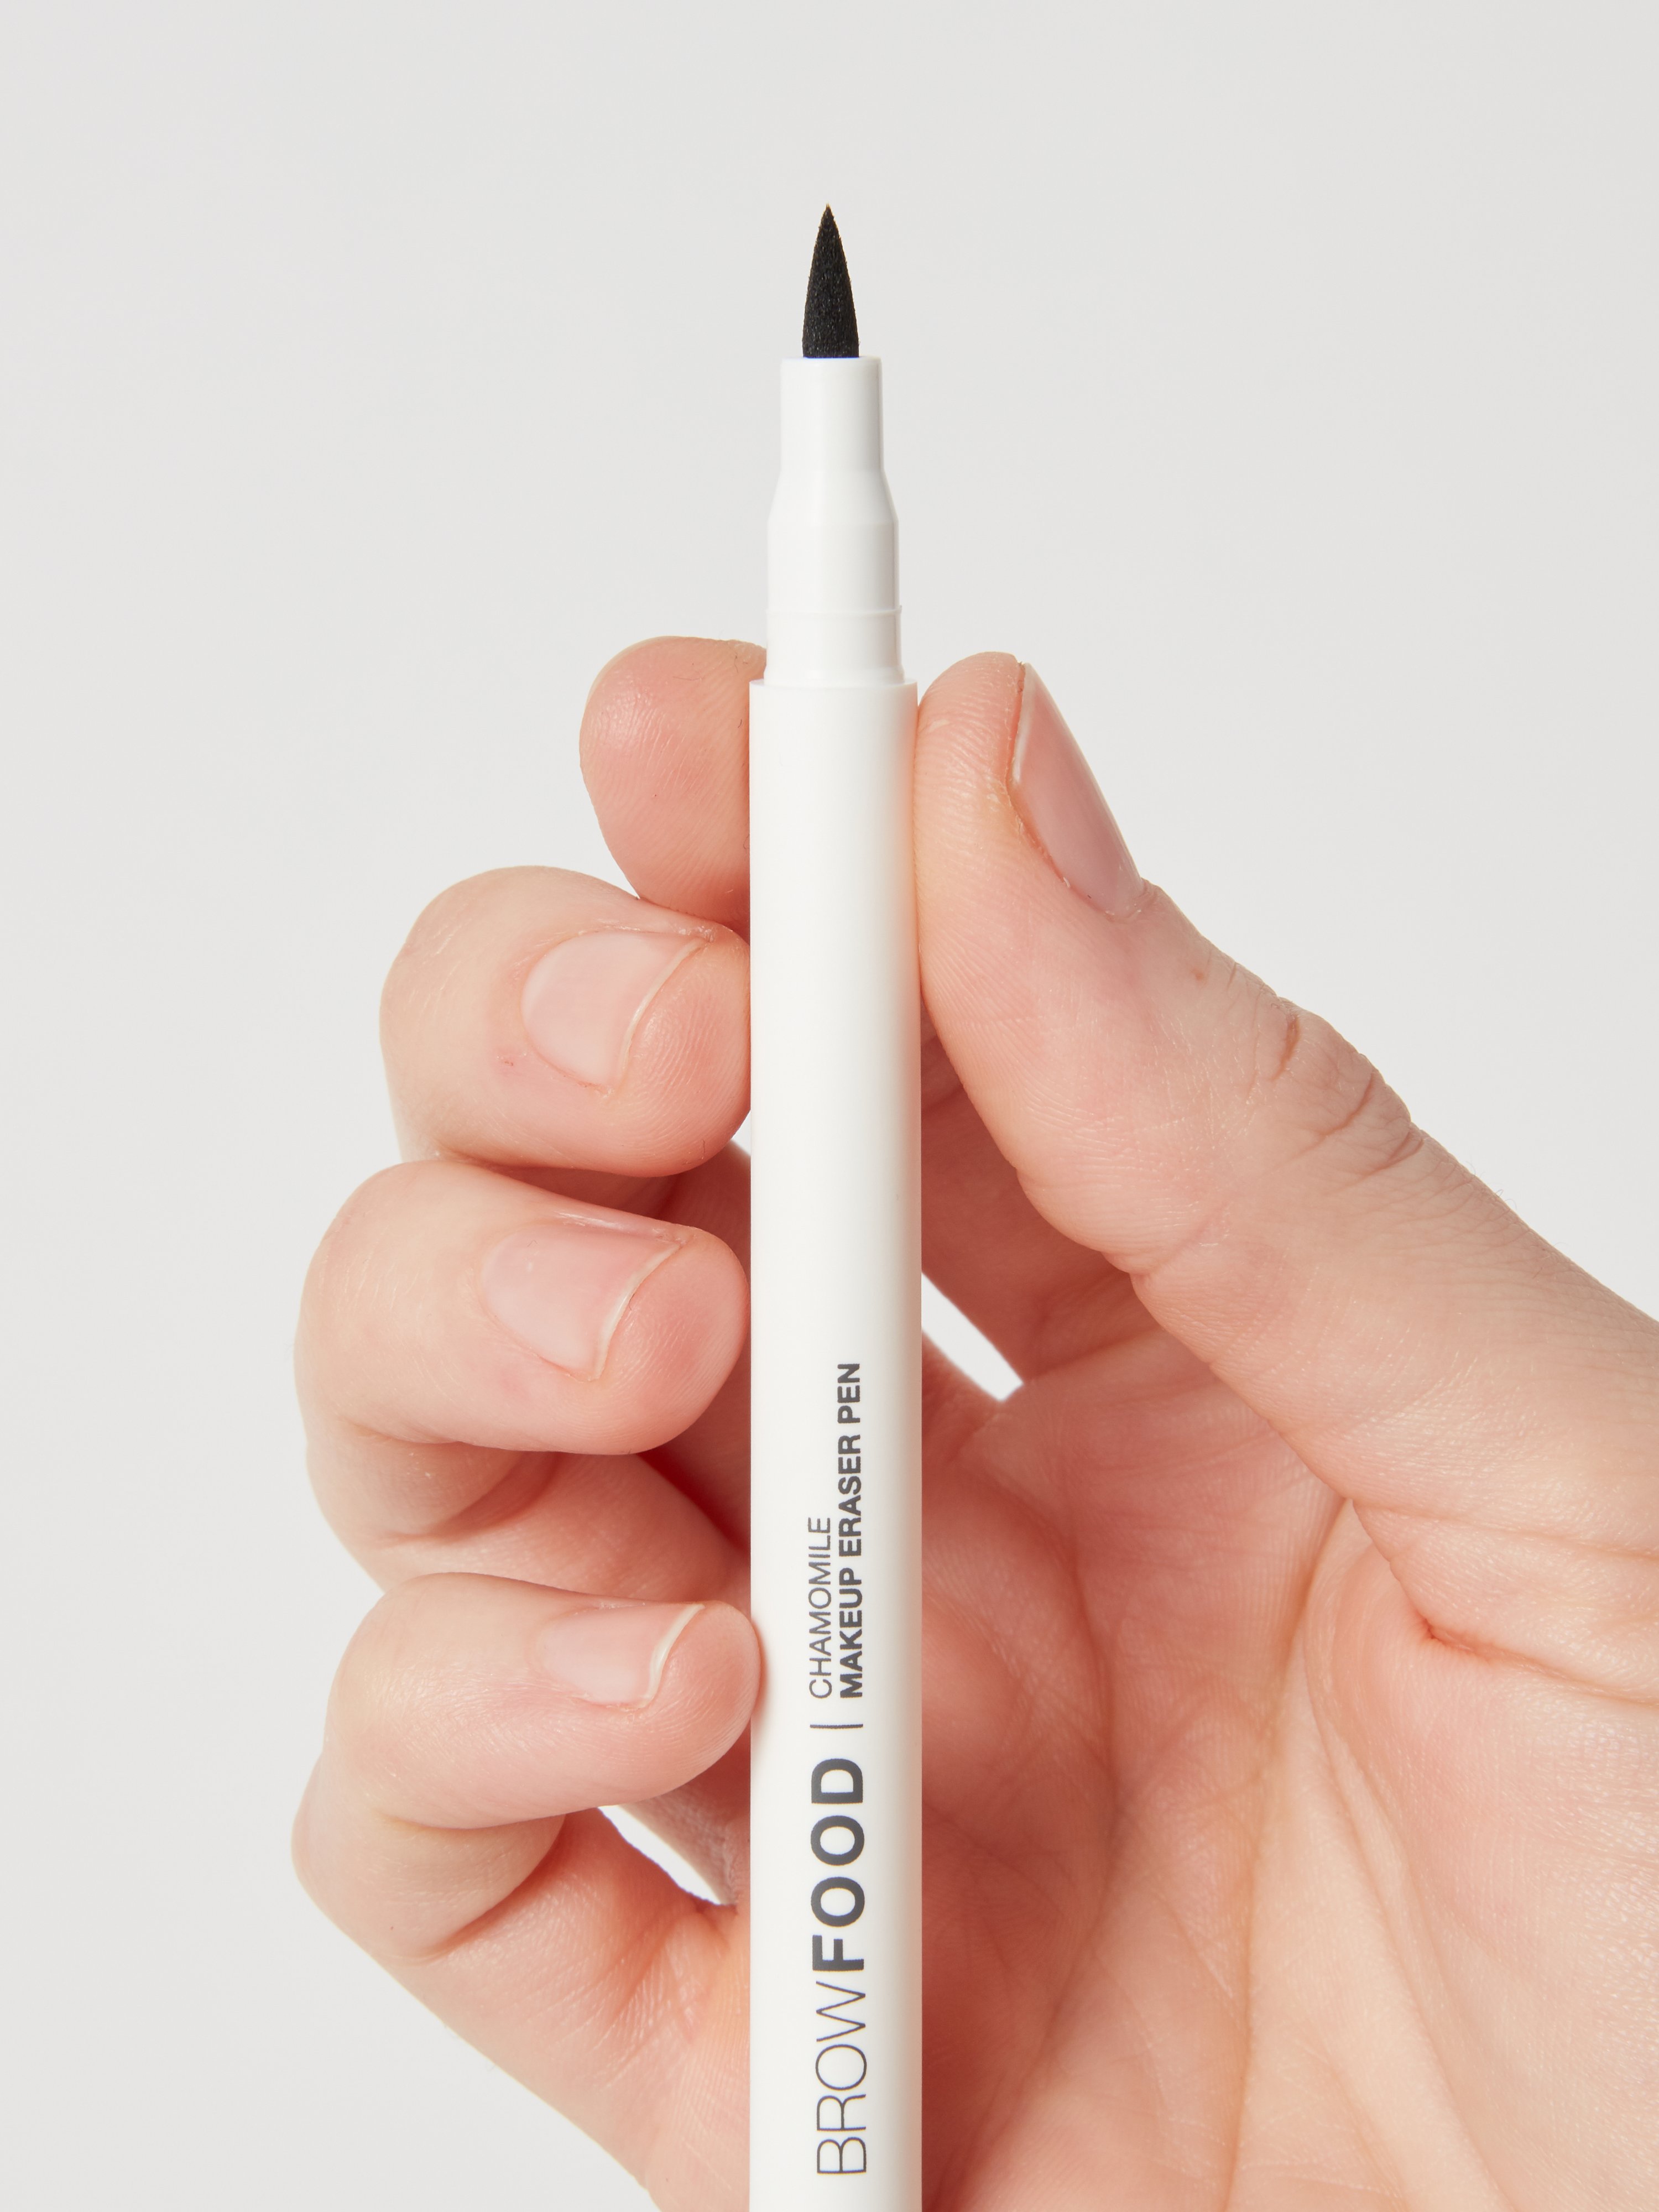 Lashfood Chamomile Makeup Eraser Pen In Clear